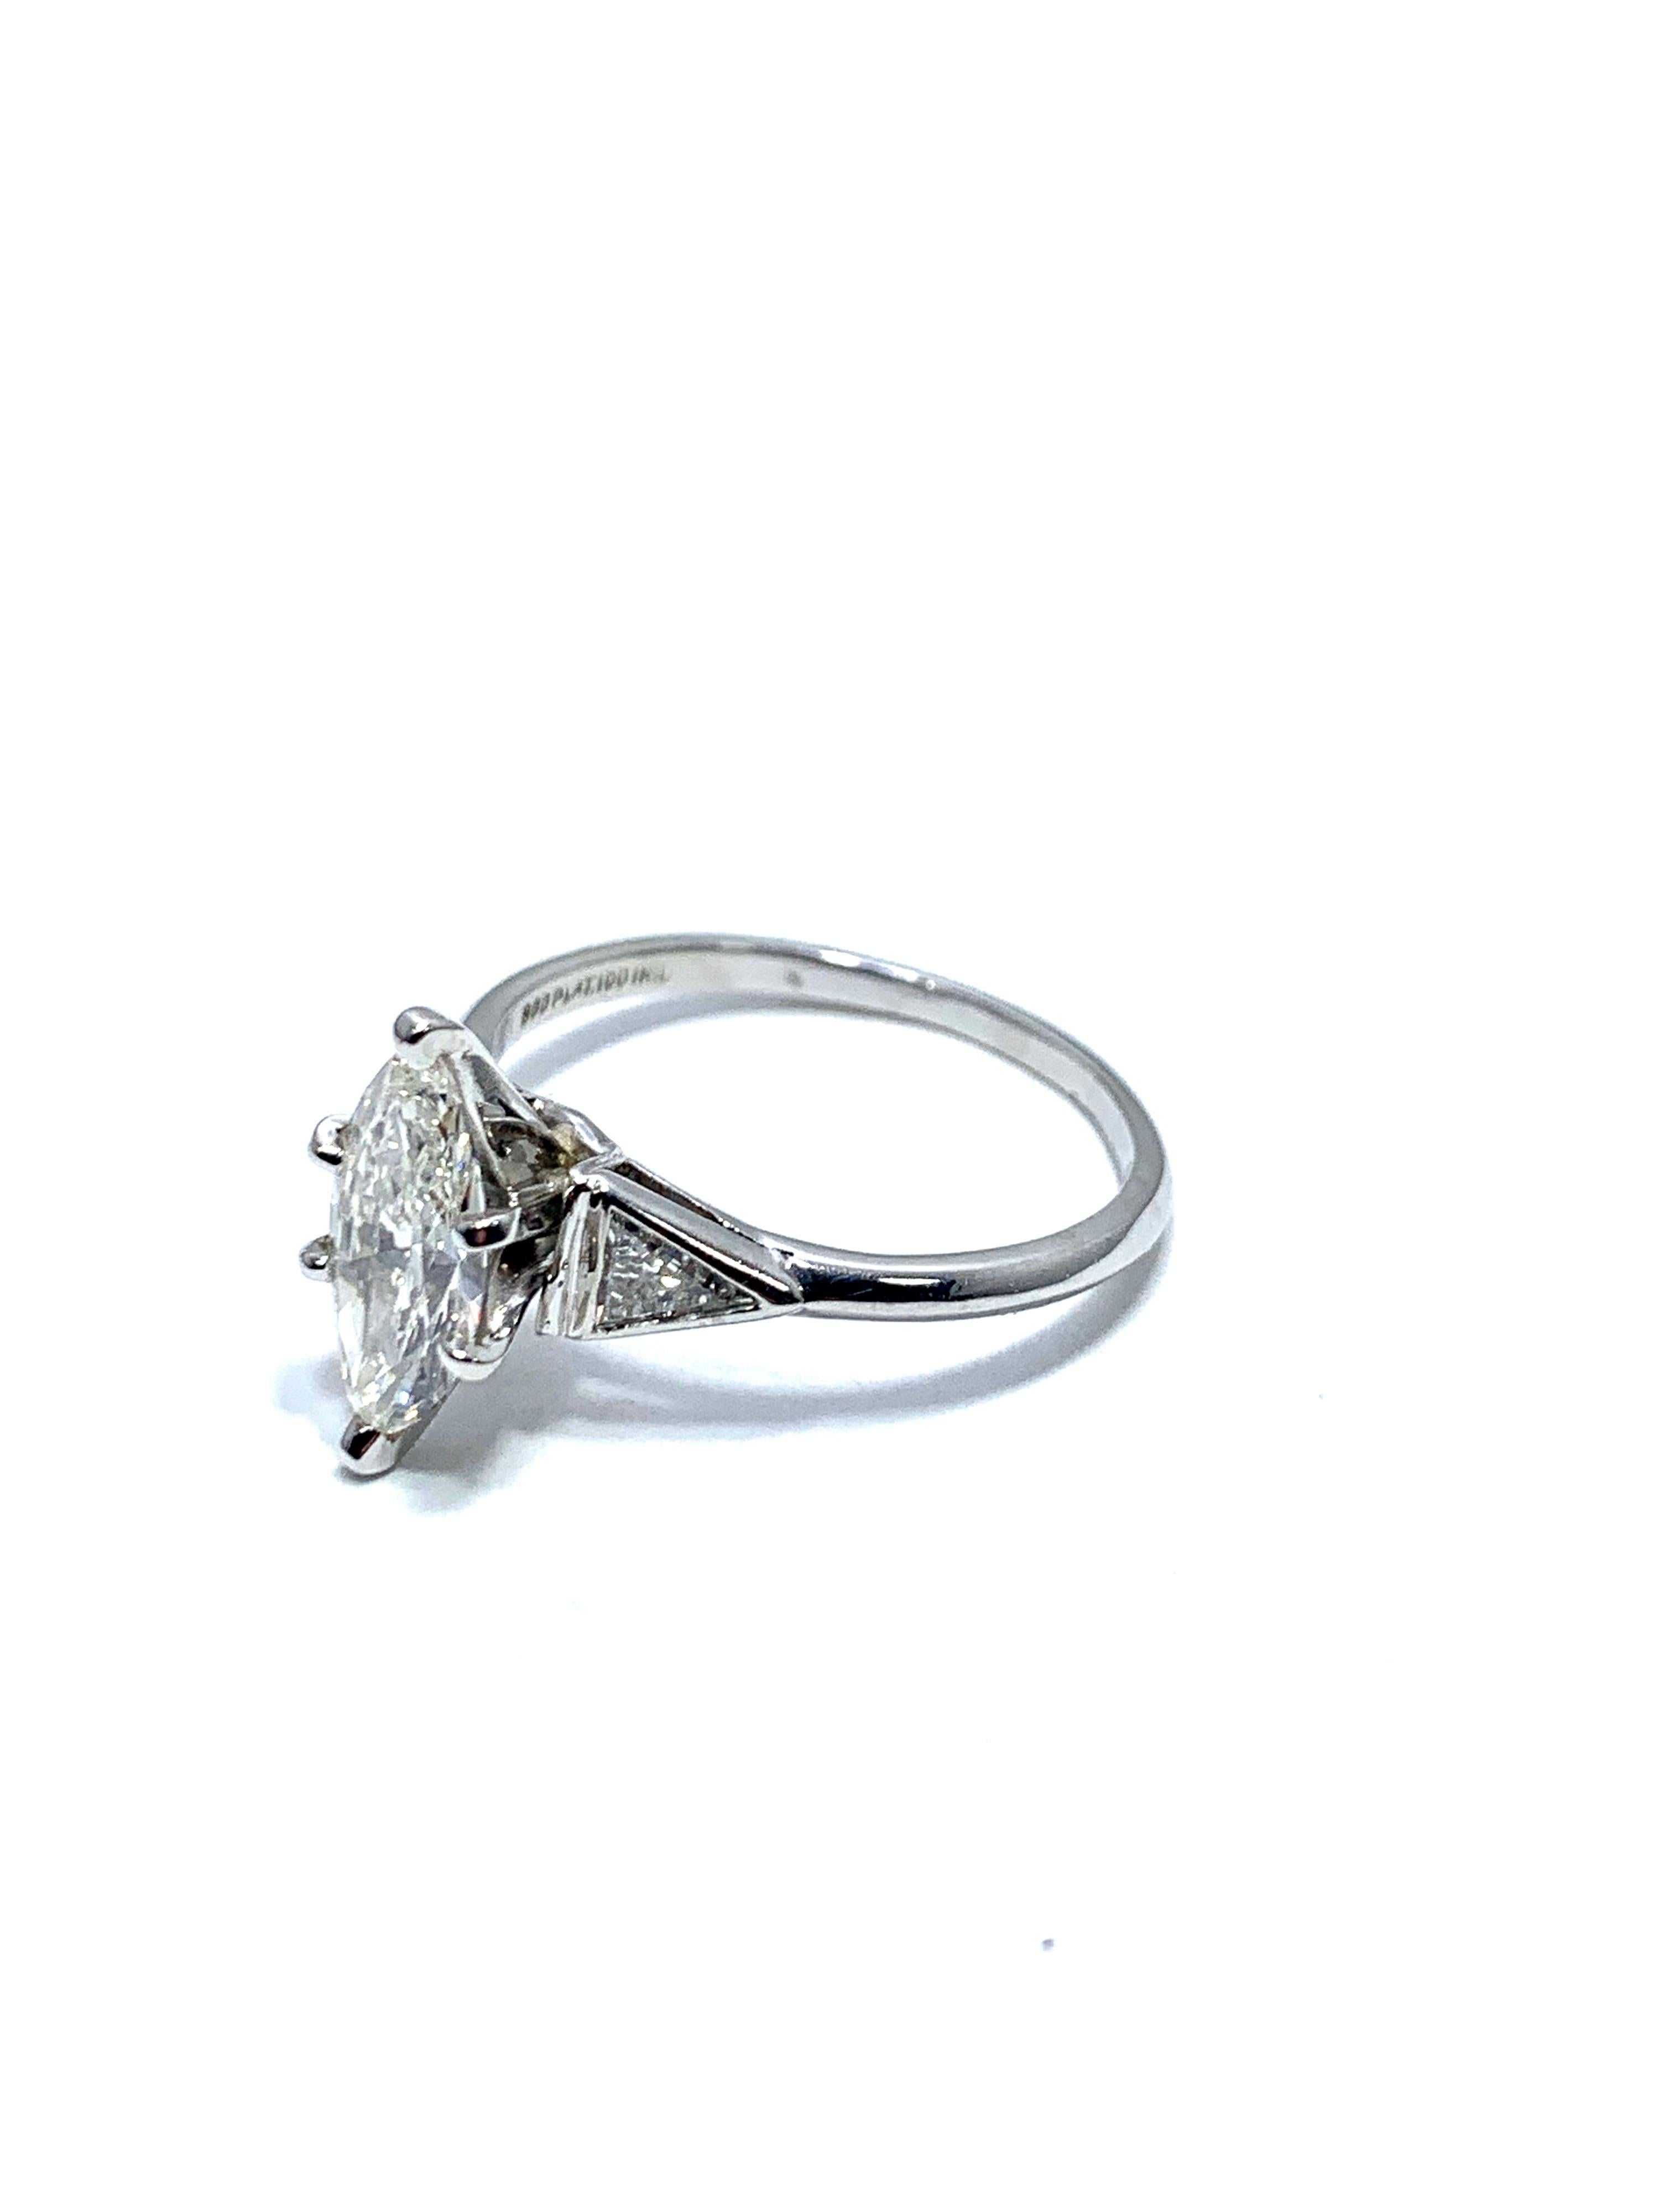 Marquise Cut 1.16 Carat Marquise Diamond and Platinum Engagement Ring